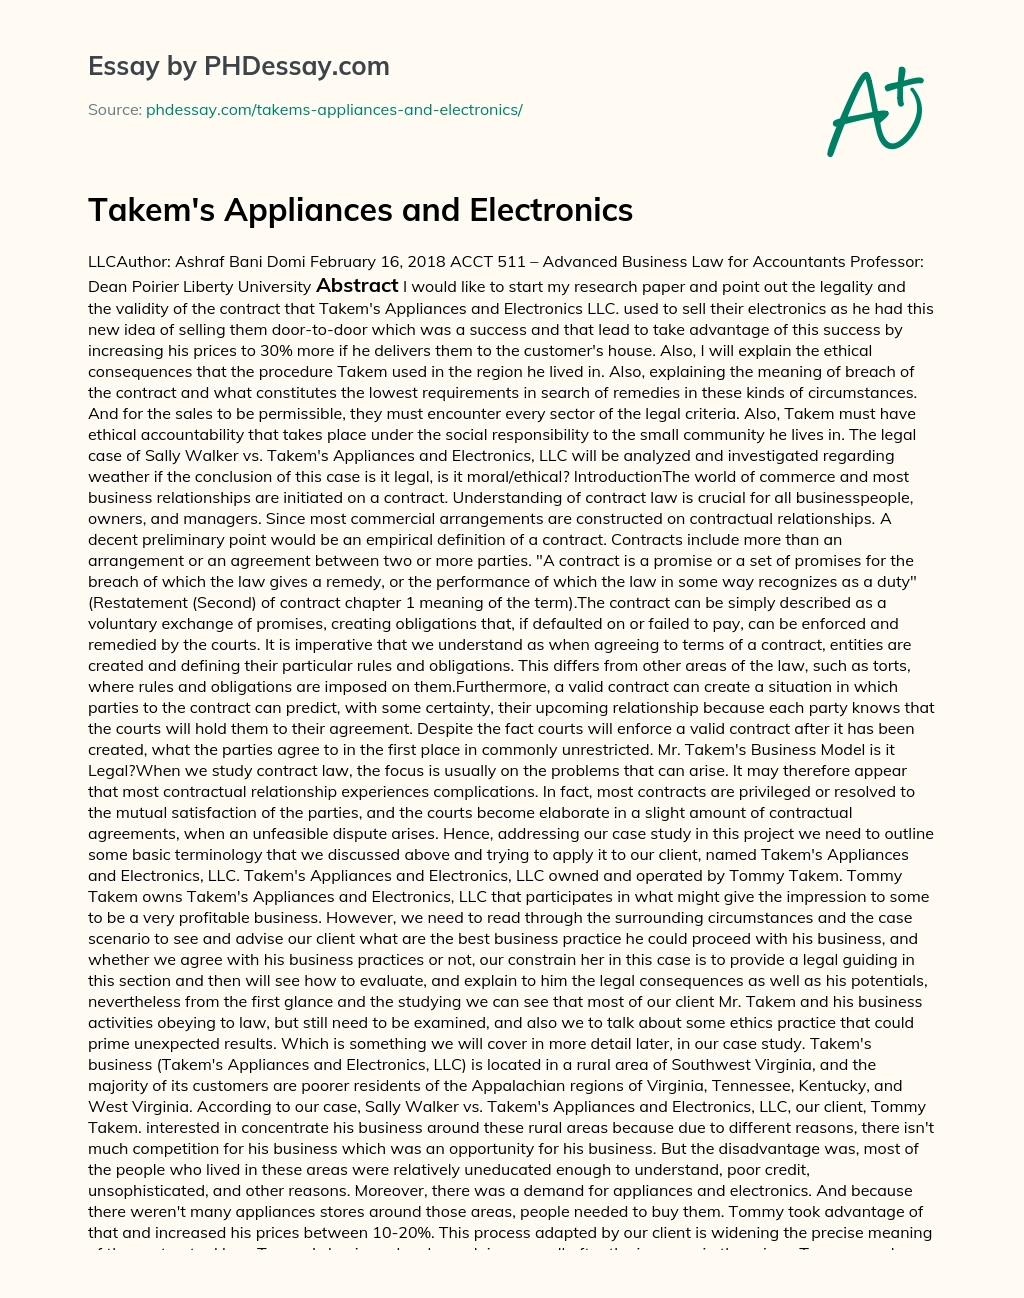 Takem’s Appliances and Electronics essay